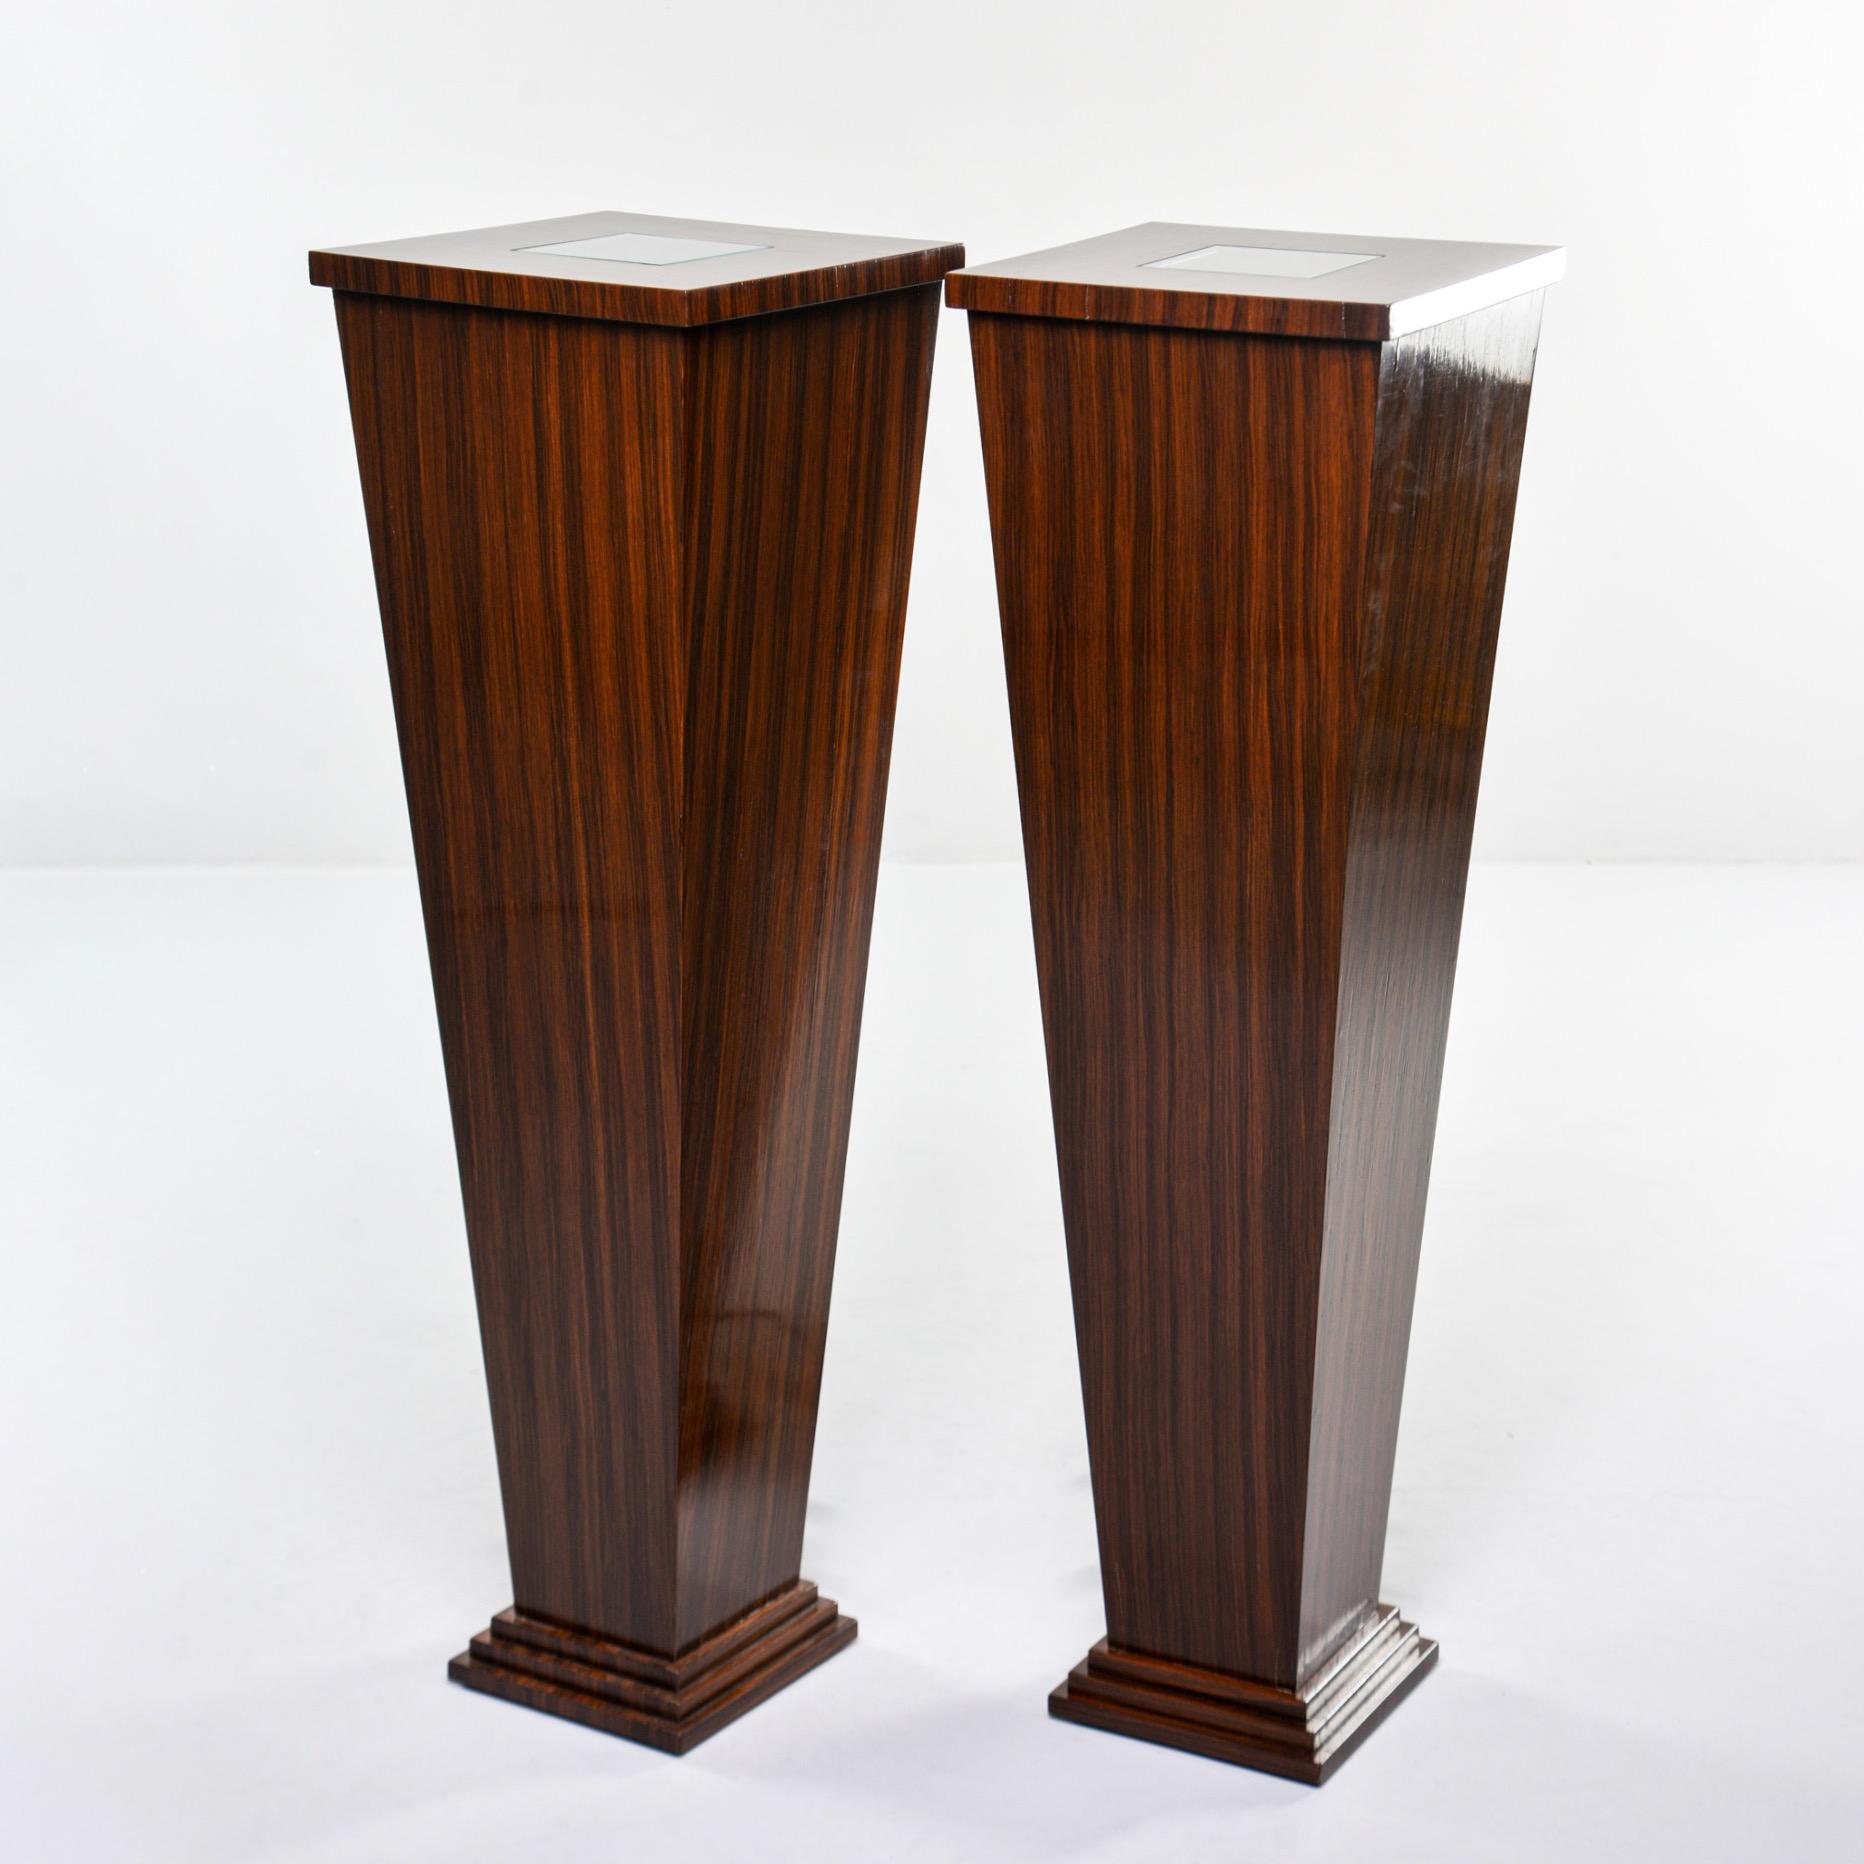 Veneer Pair of Tall Bespoke Walnut Display Stands with Interior under Light